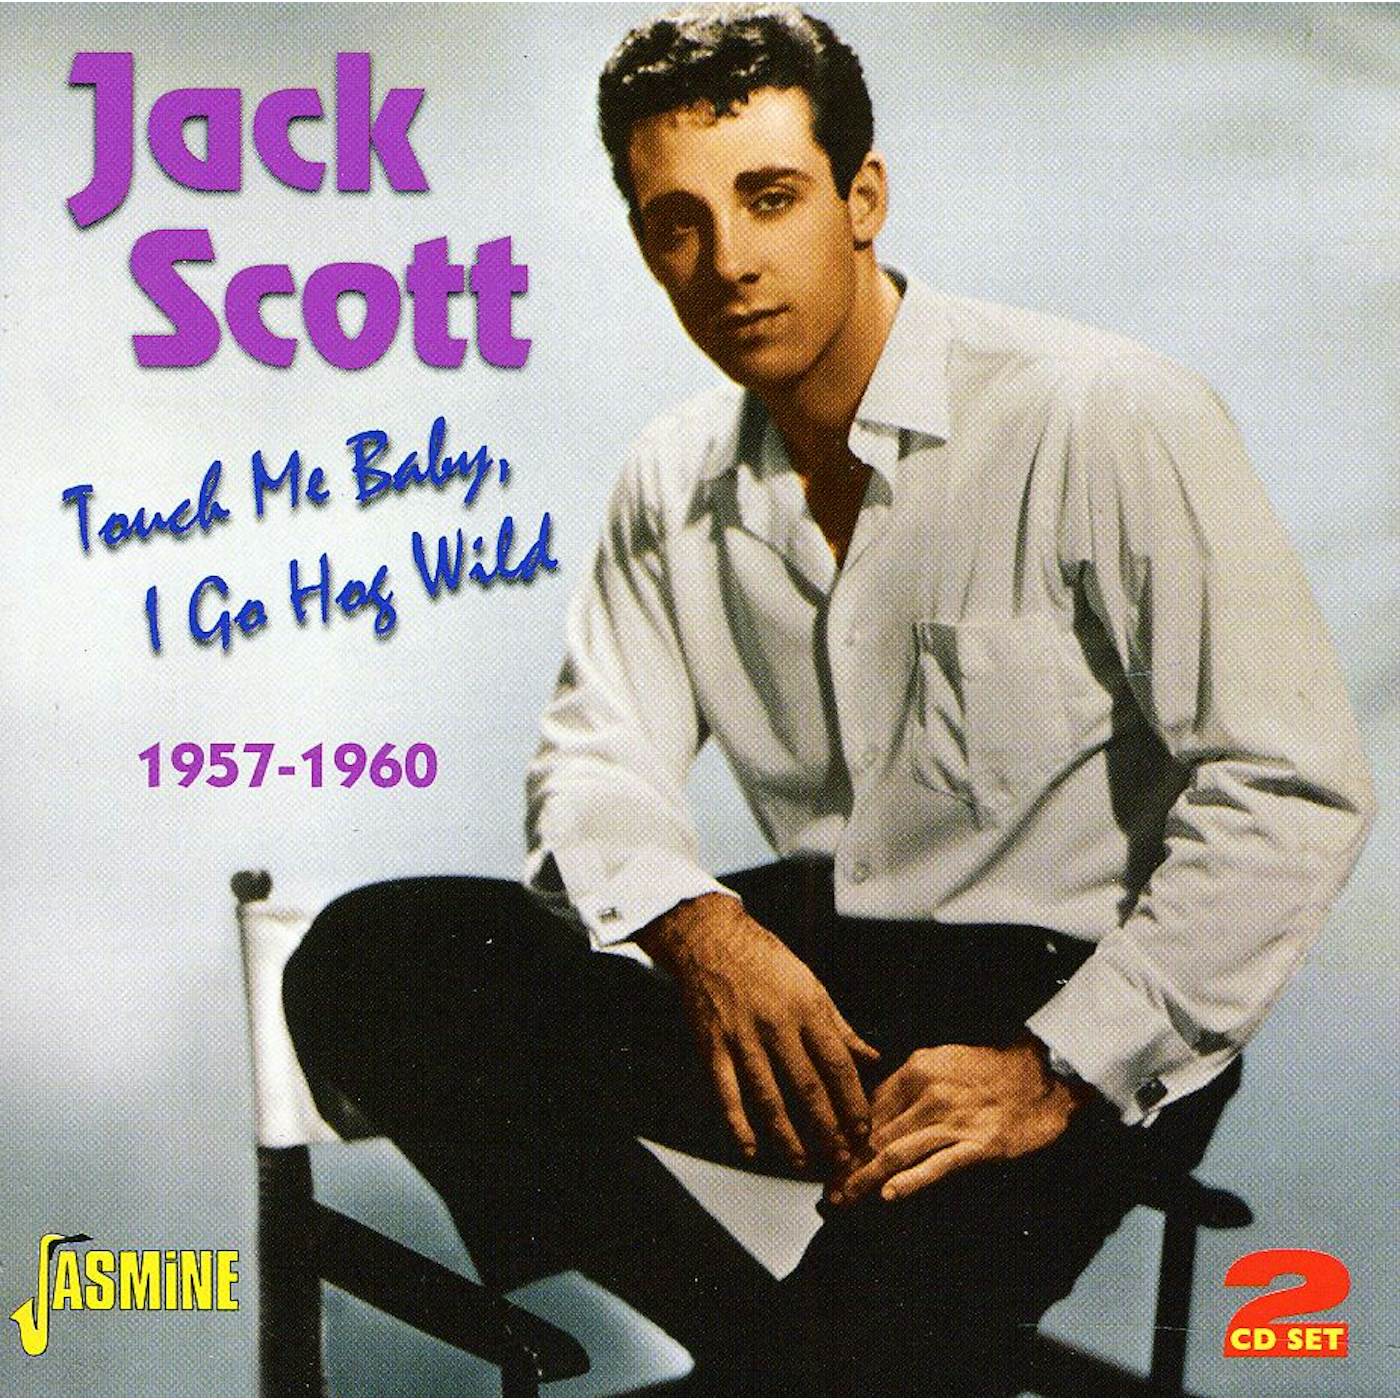 Jack Scott TOUCH ME BABY I GO HOG WILD 1957 - 1960 CD